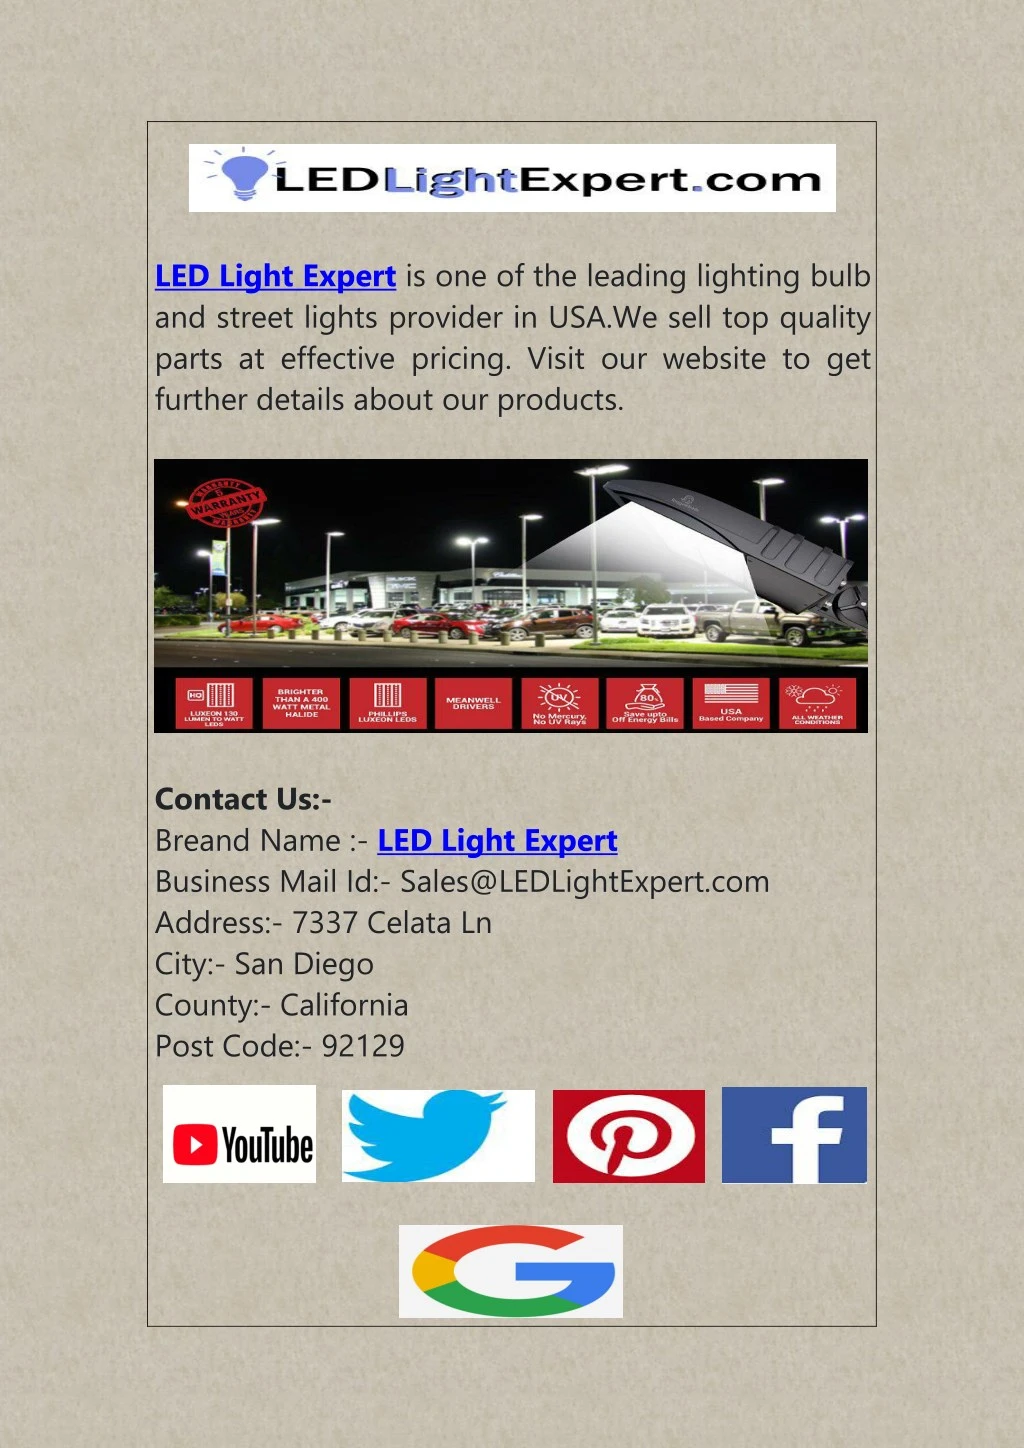 led light expert is one of the leading lighting